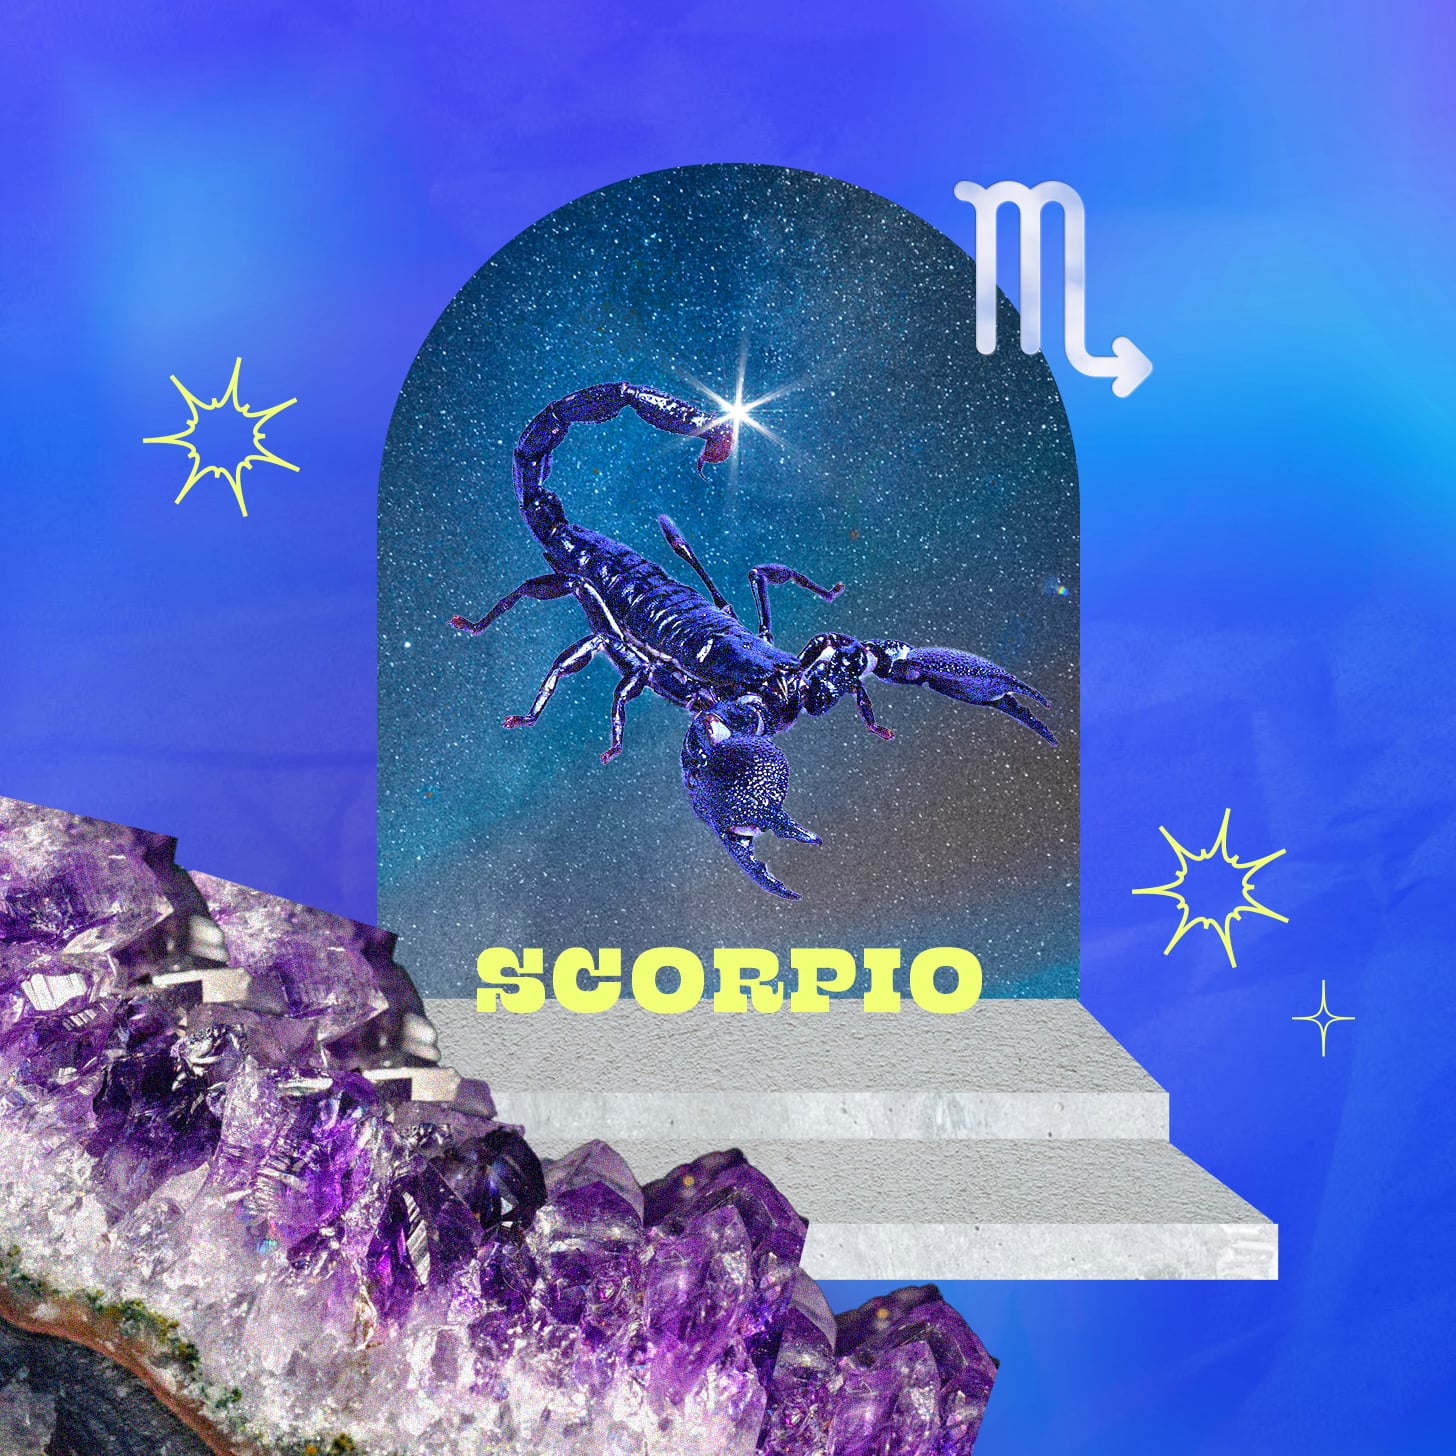 Scorpio weekly horoscope for July 17, 2022